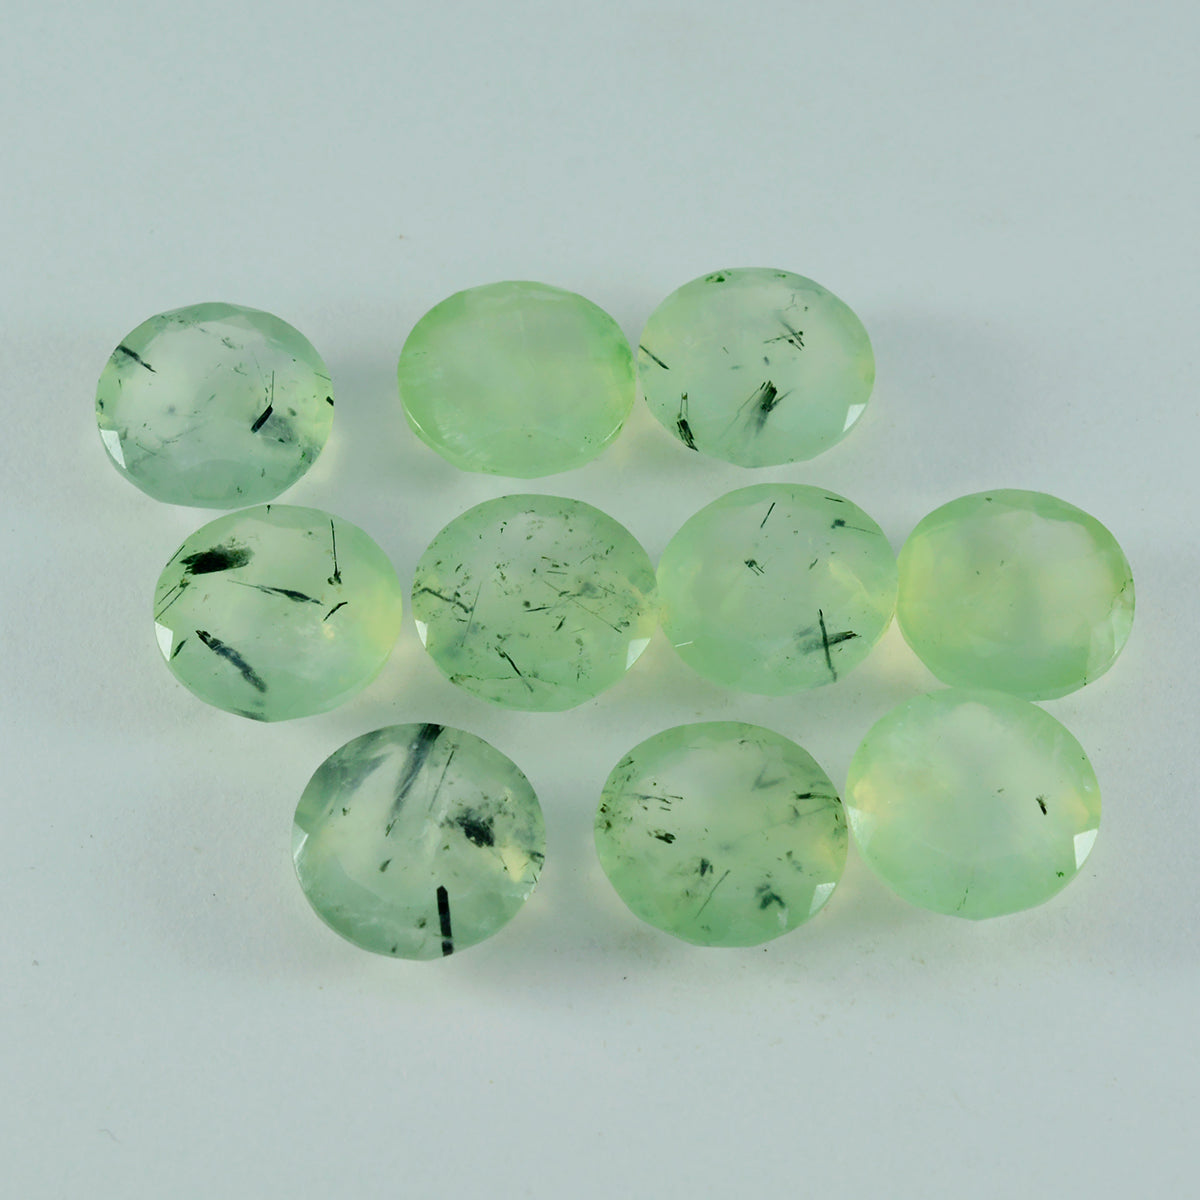 Riyogems 1PC Green Prehnite Faceted 11x11 mm Round Shape A+1 Quality Gemstone